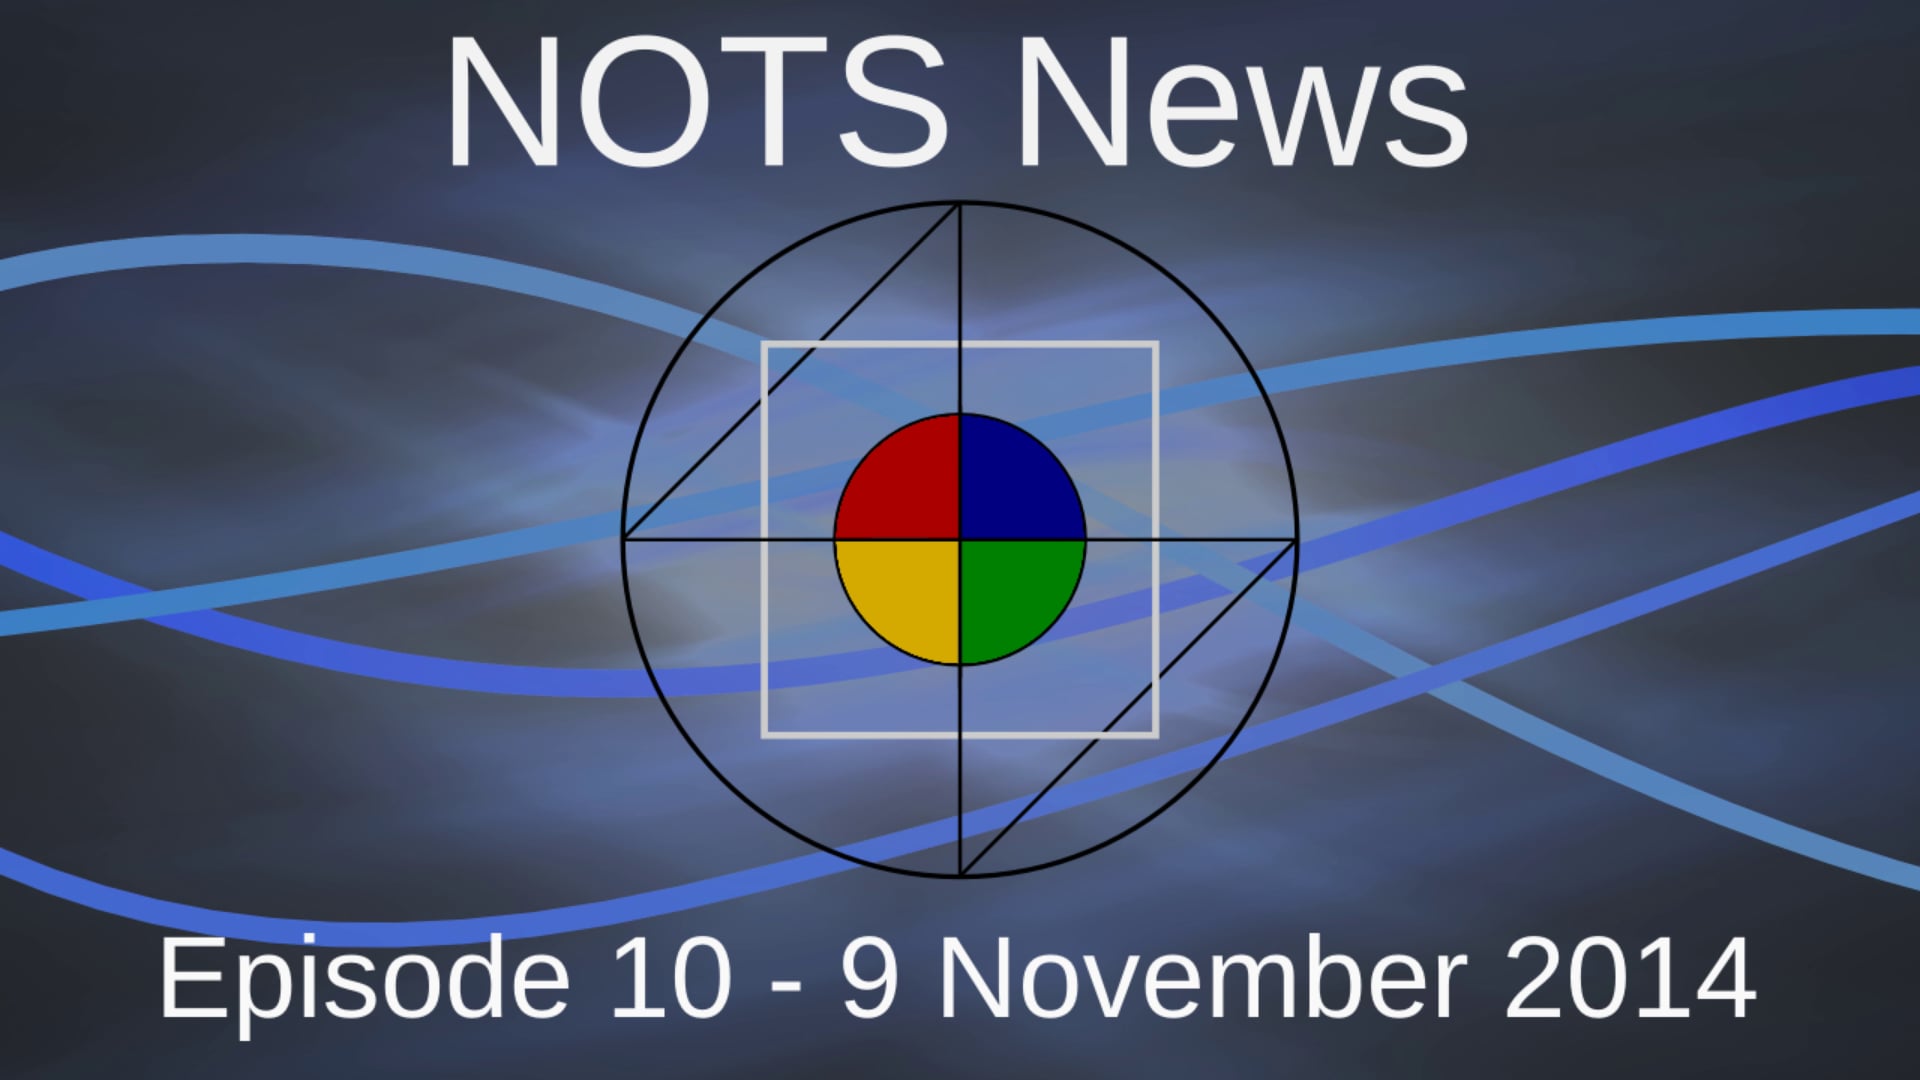 9 November 2014 - NOTS News